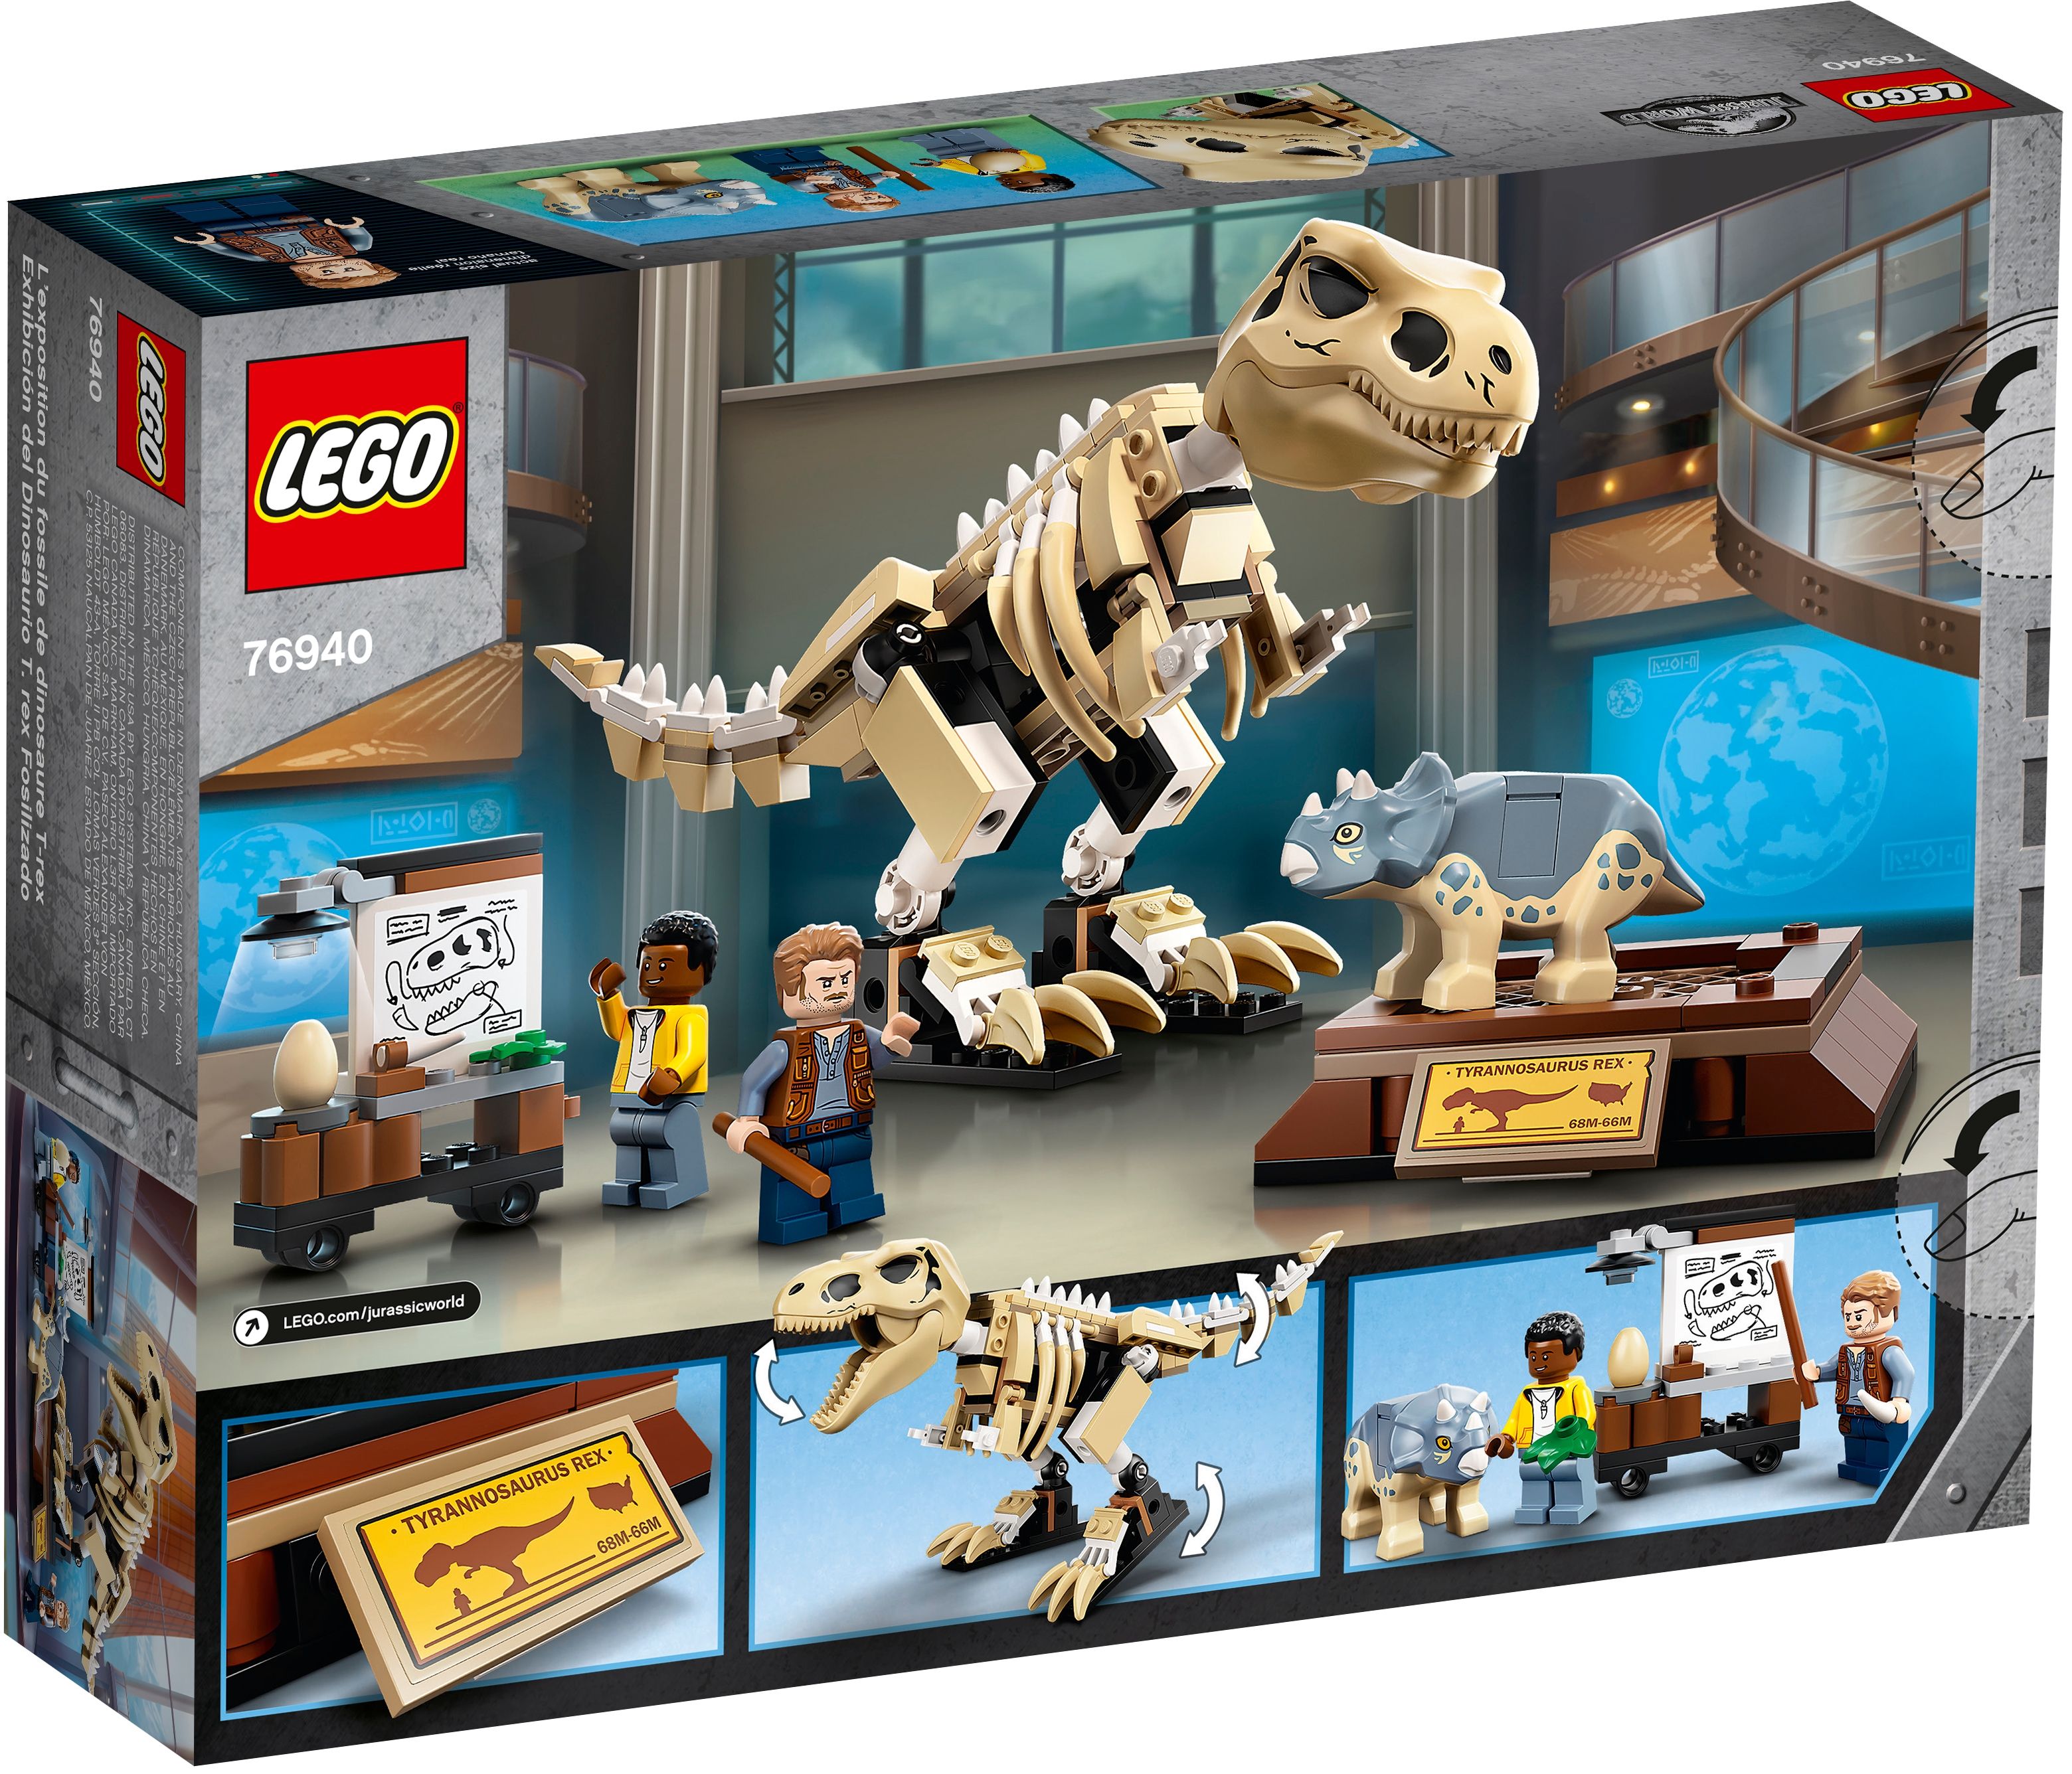 LEGO Jurassic World 76940 T. Rex-Skelett in der Fossilienausstellung LEGO_76940_box5_v39.jpg